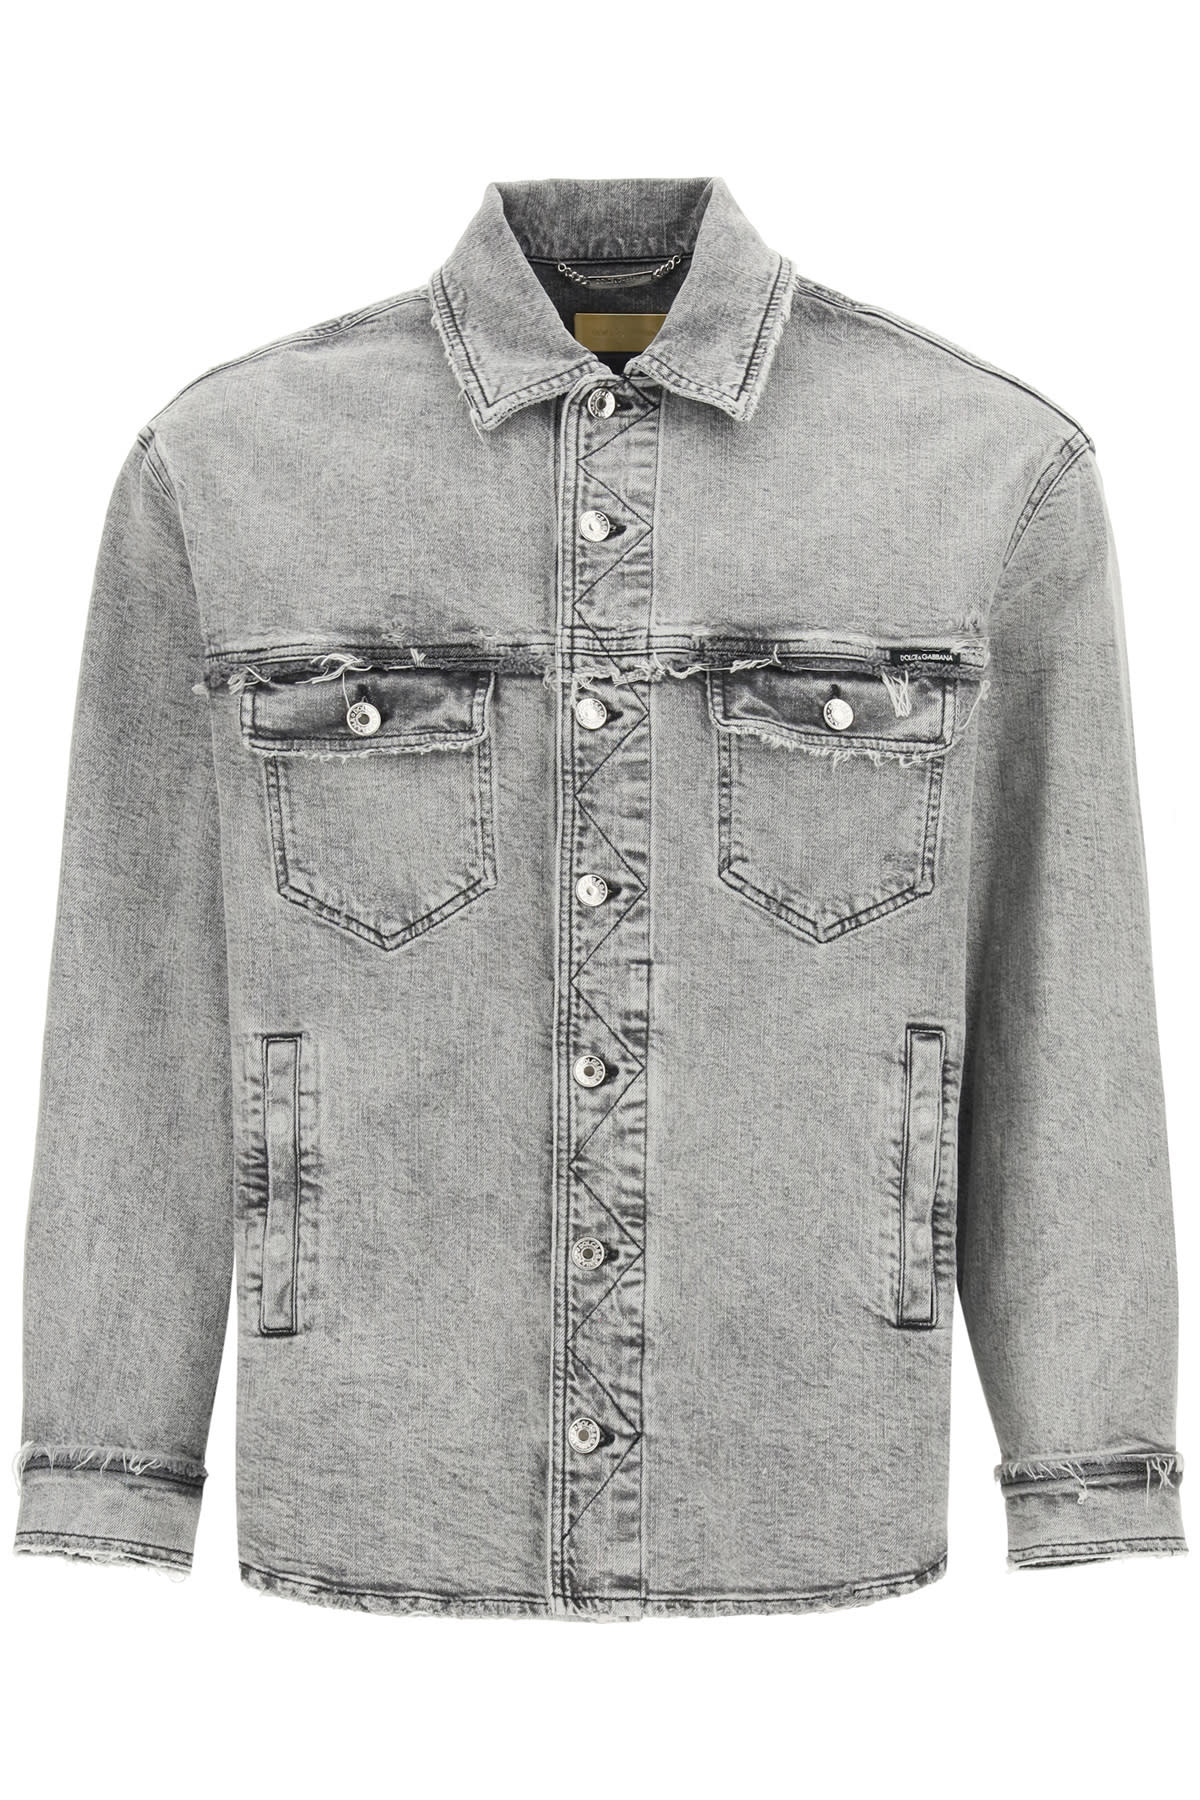 Dolce & Gabbana Shirt-style Denim Jacket